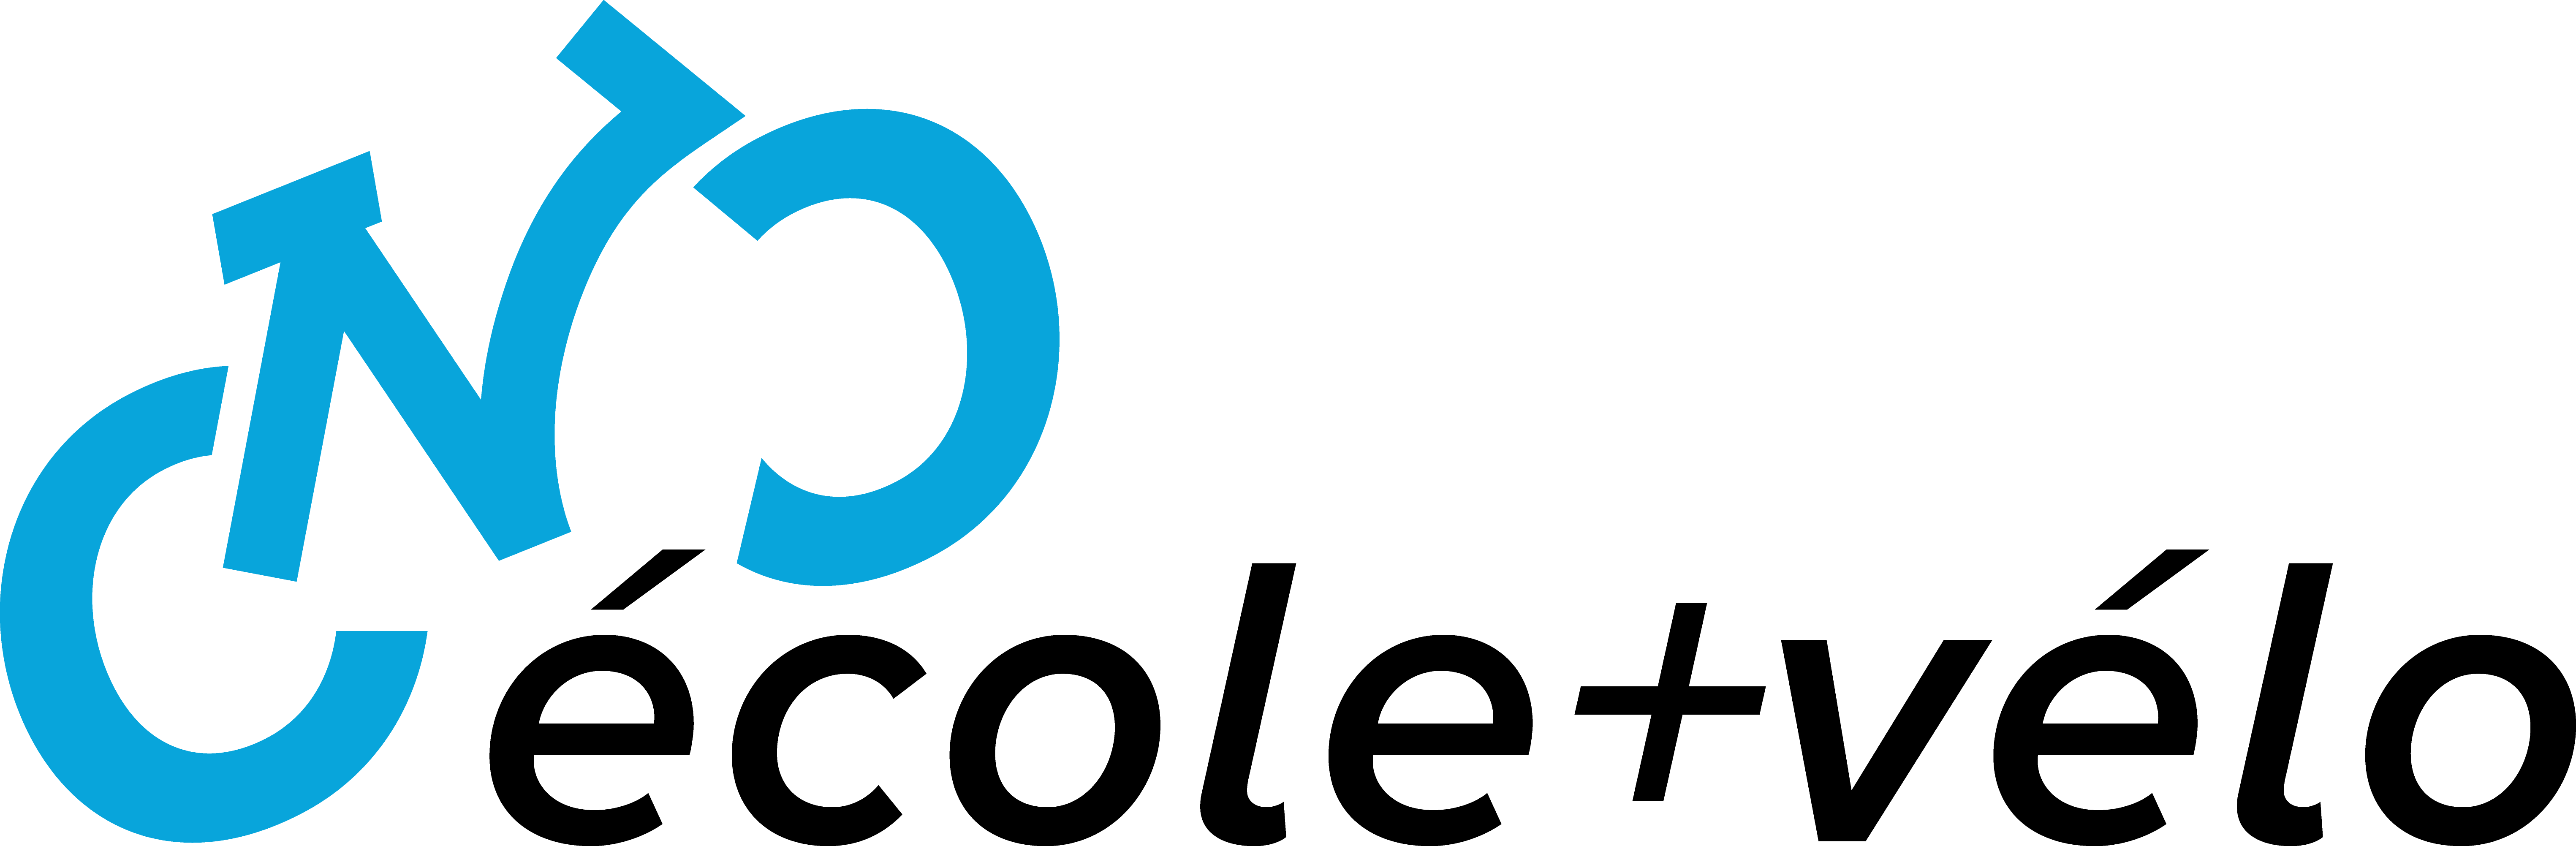 suv logo f